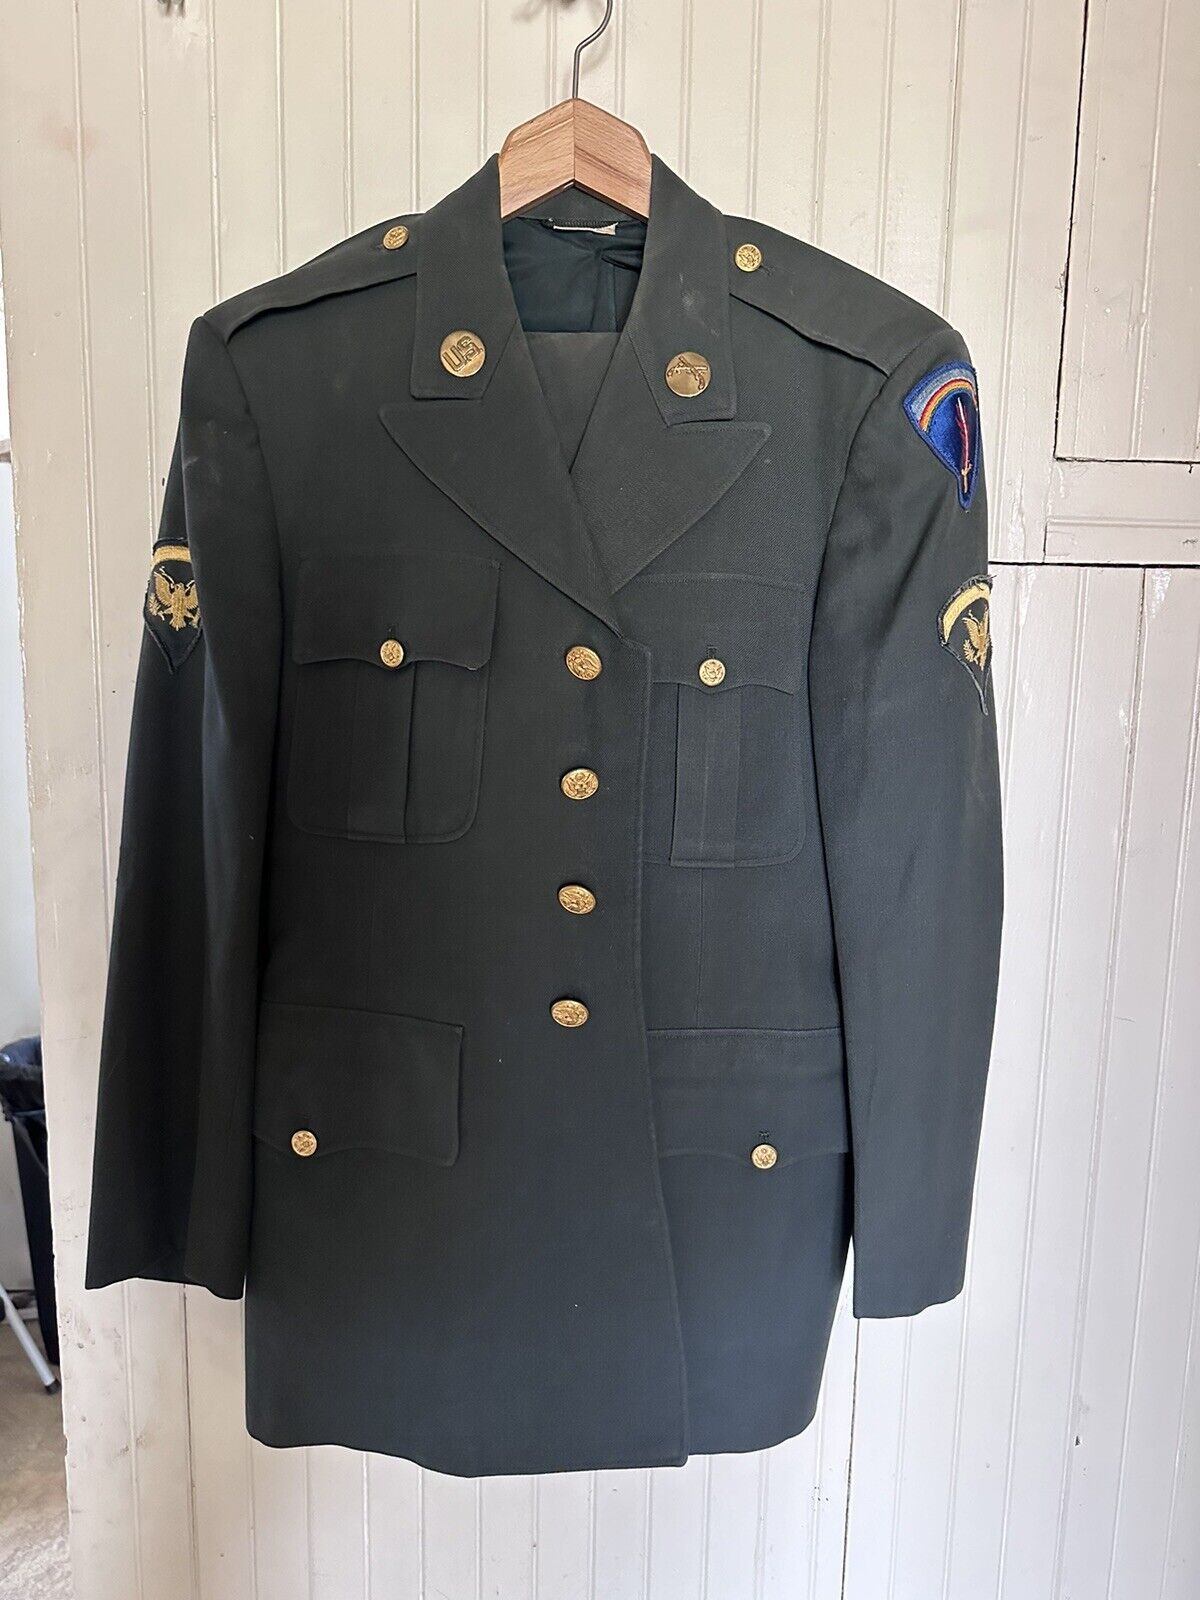 Vintage US Army Vietnam Uniform Pants Slacks Jacket Coat Specialist SHAEF